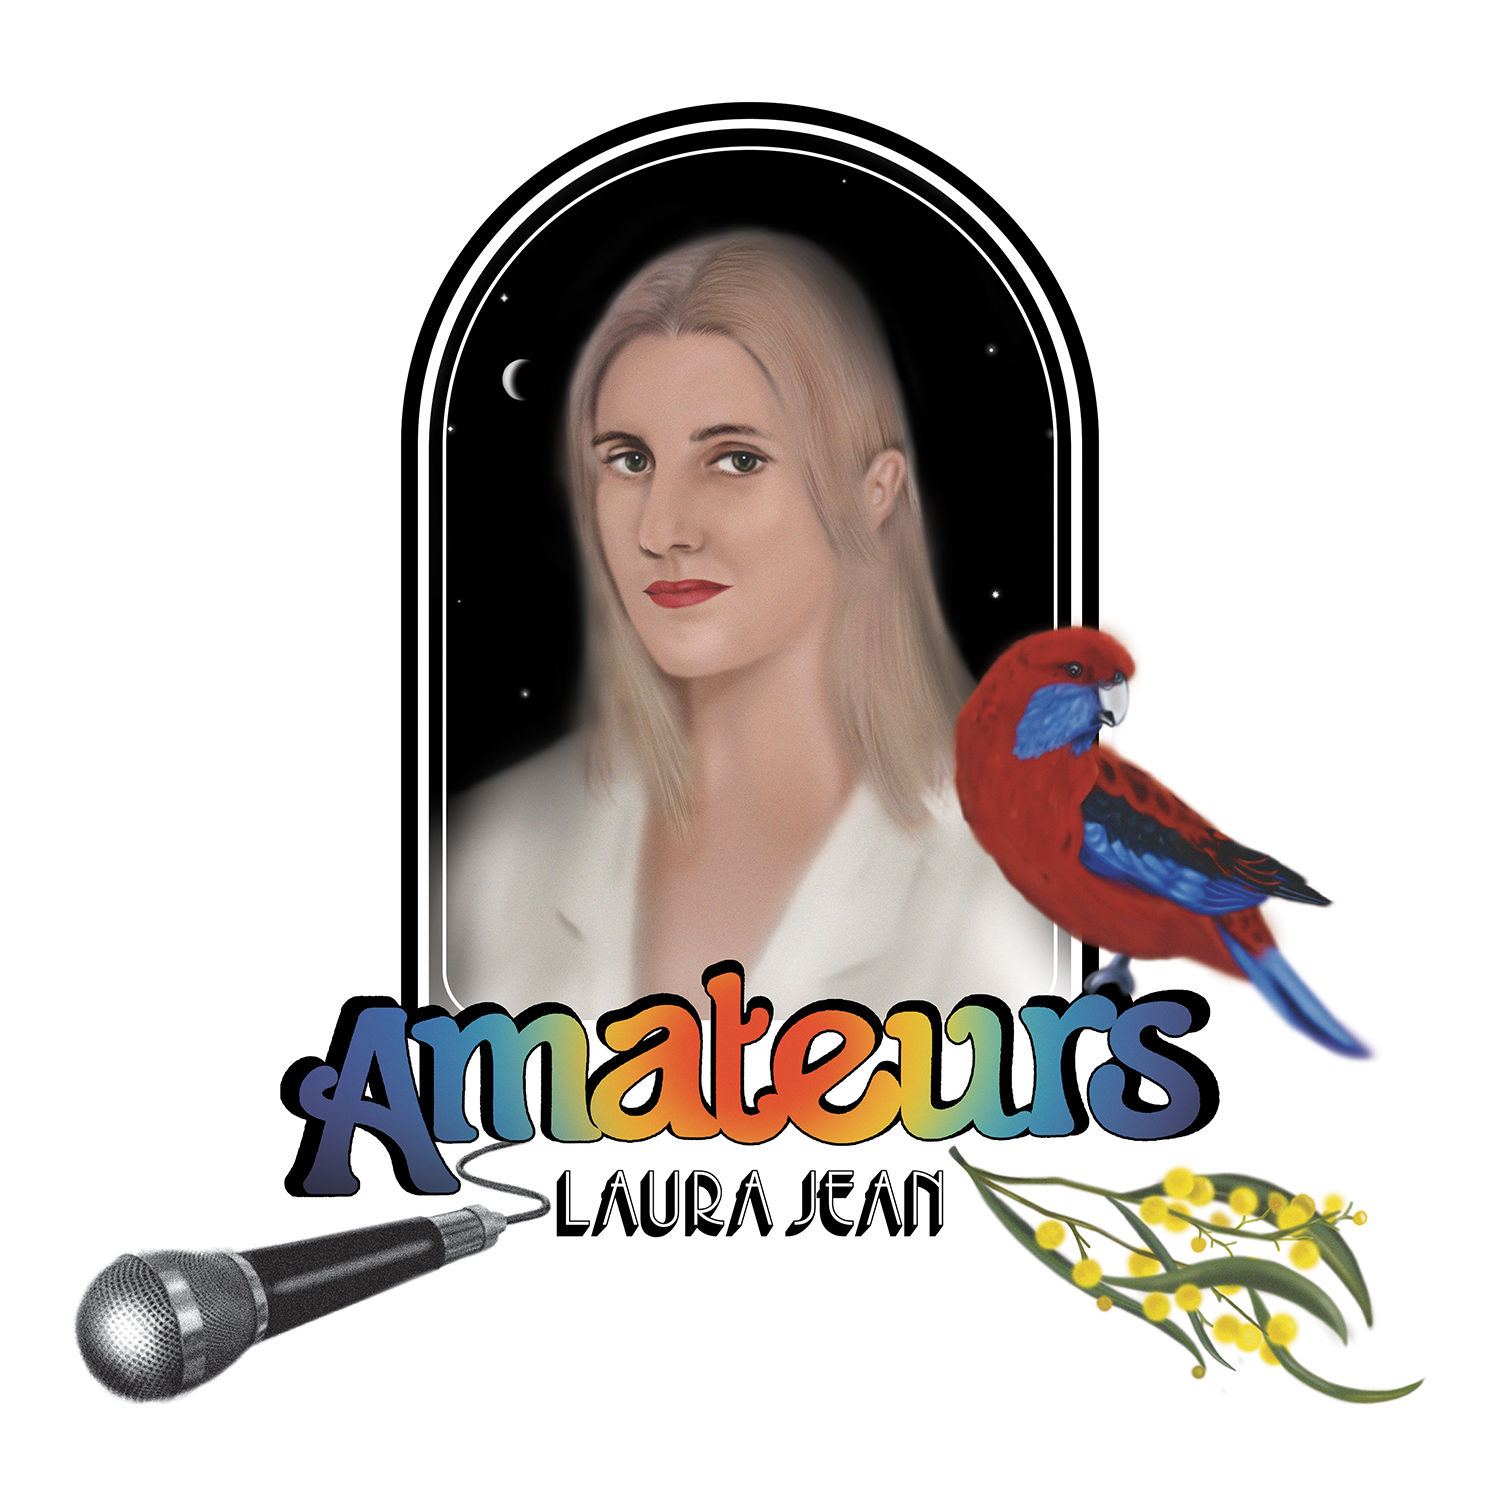 Amateurs 2022 Indie Laura Jean Download Indie Music Download